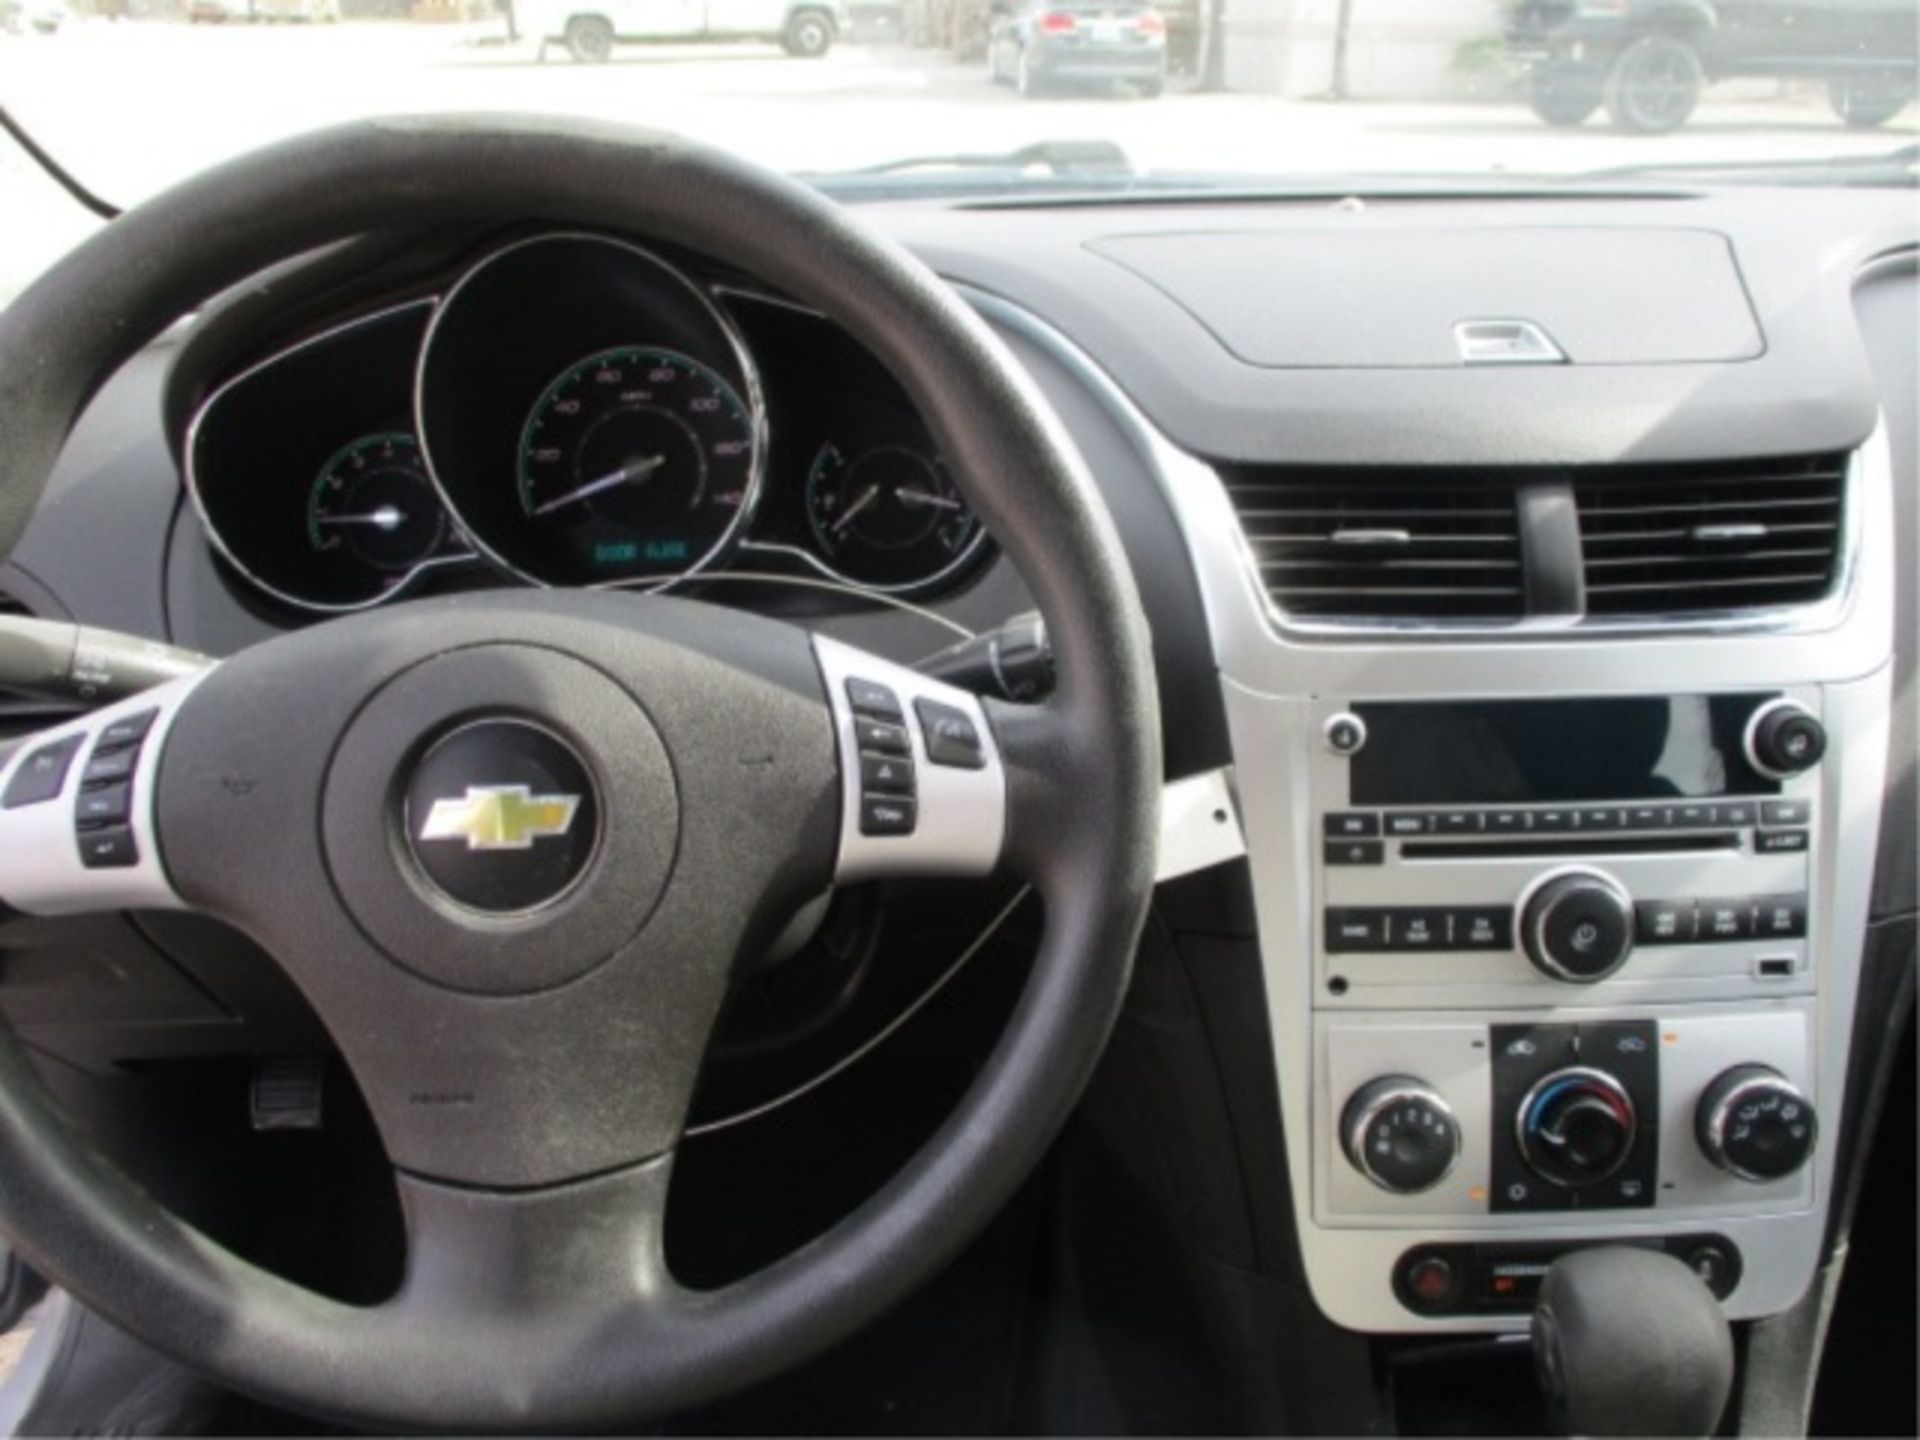 2012 Chevrolet Malibu Sedan, 2.4L Gas, Automatic, S/N: 1G1ZC5E05CF335186, Miles/Hours - 106478 - Image 12 of 16